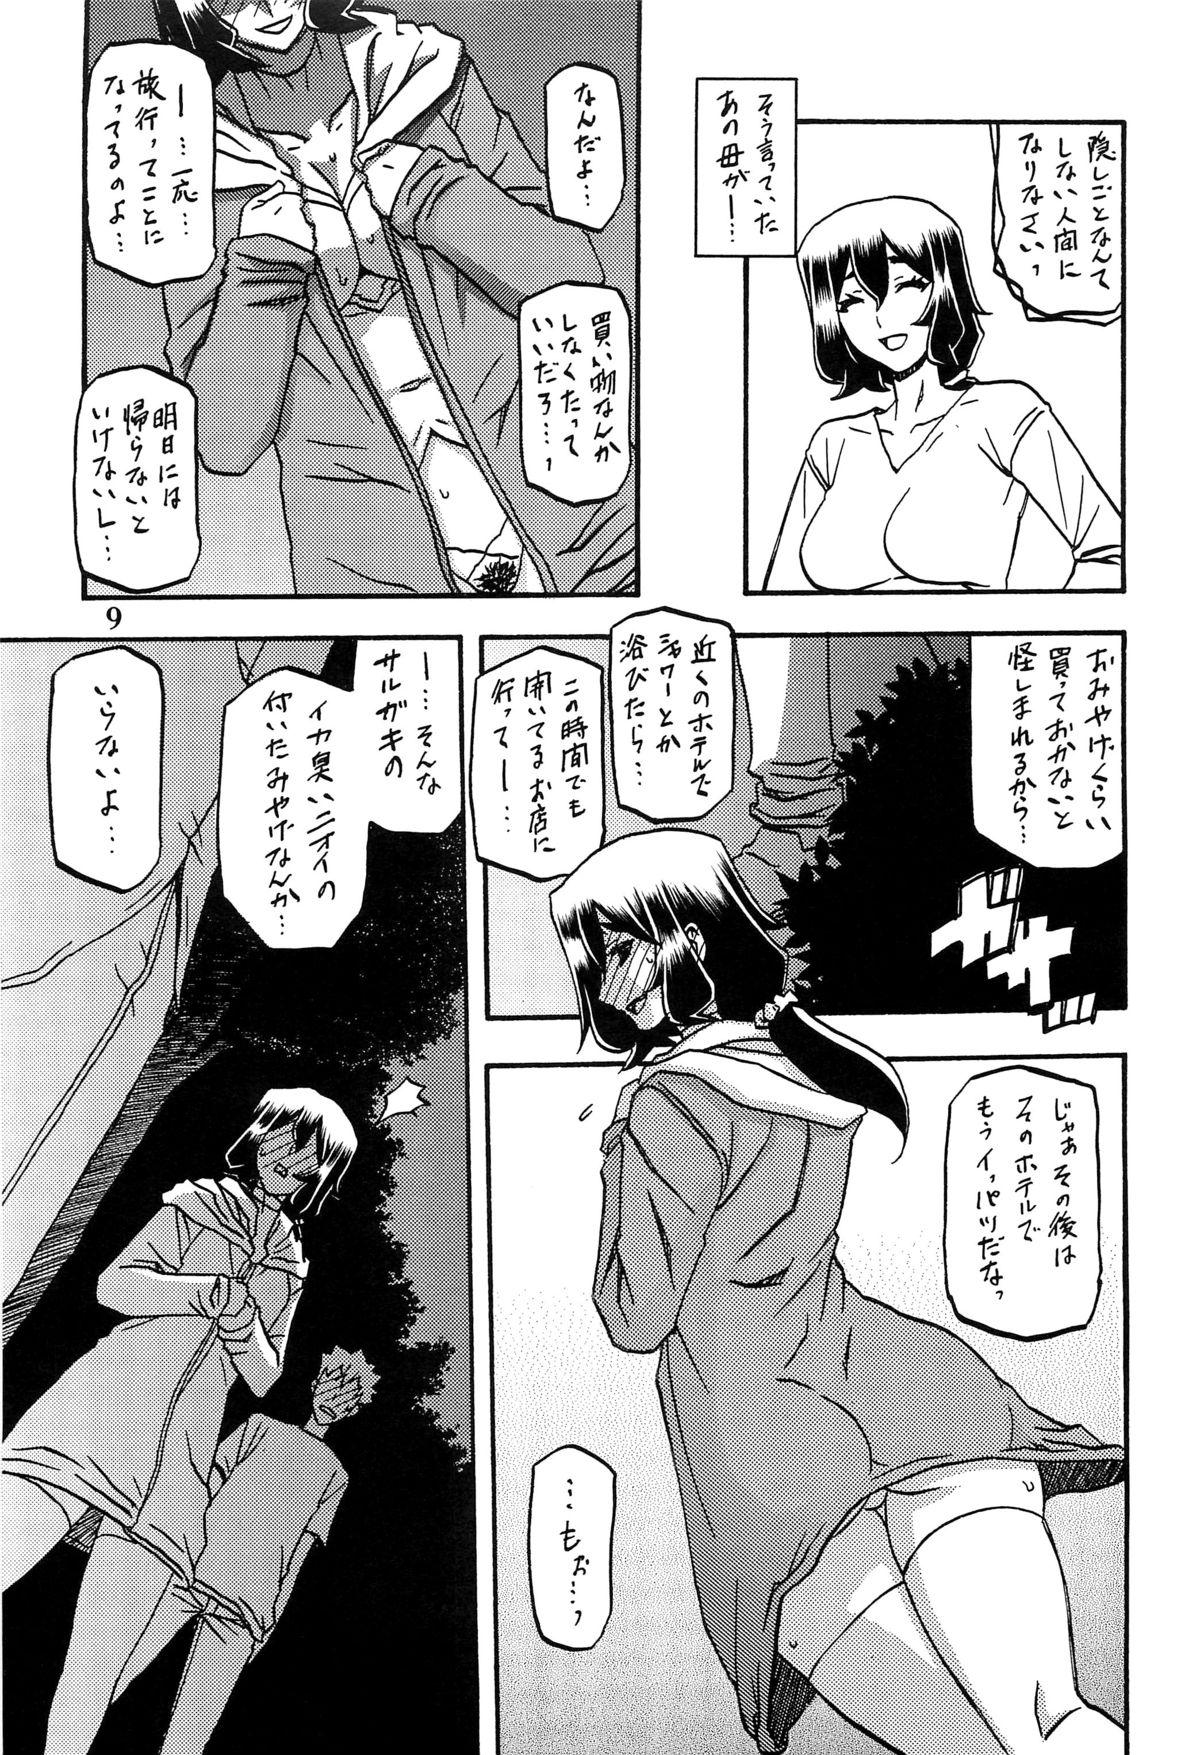 Step Fantasy Akebi no Mi - Chizuru AFTER Atm - Page 8